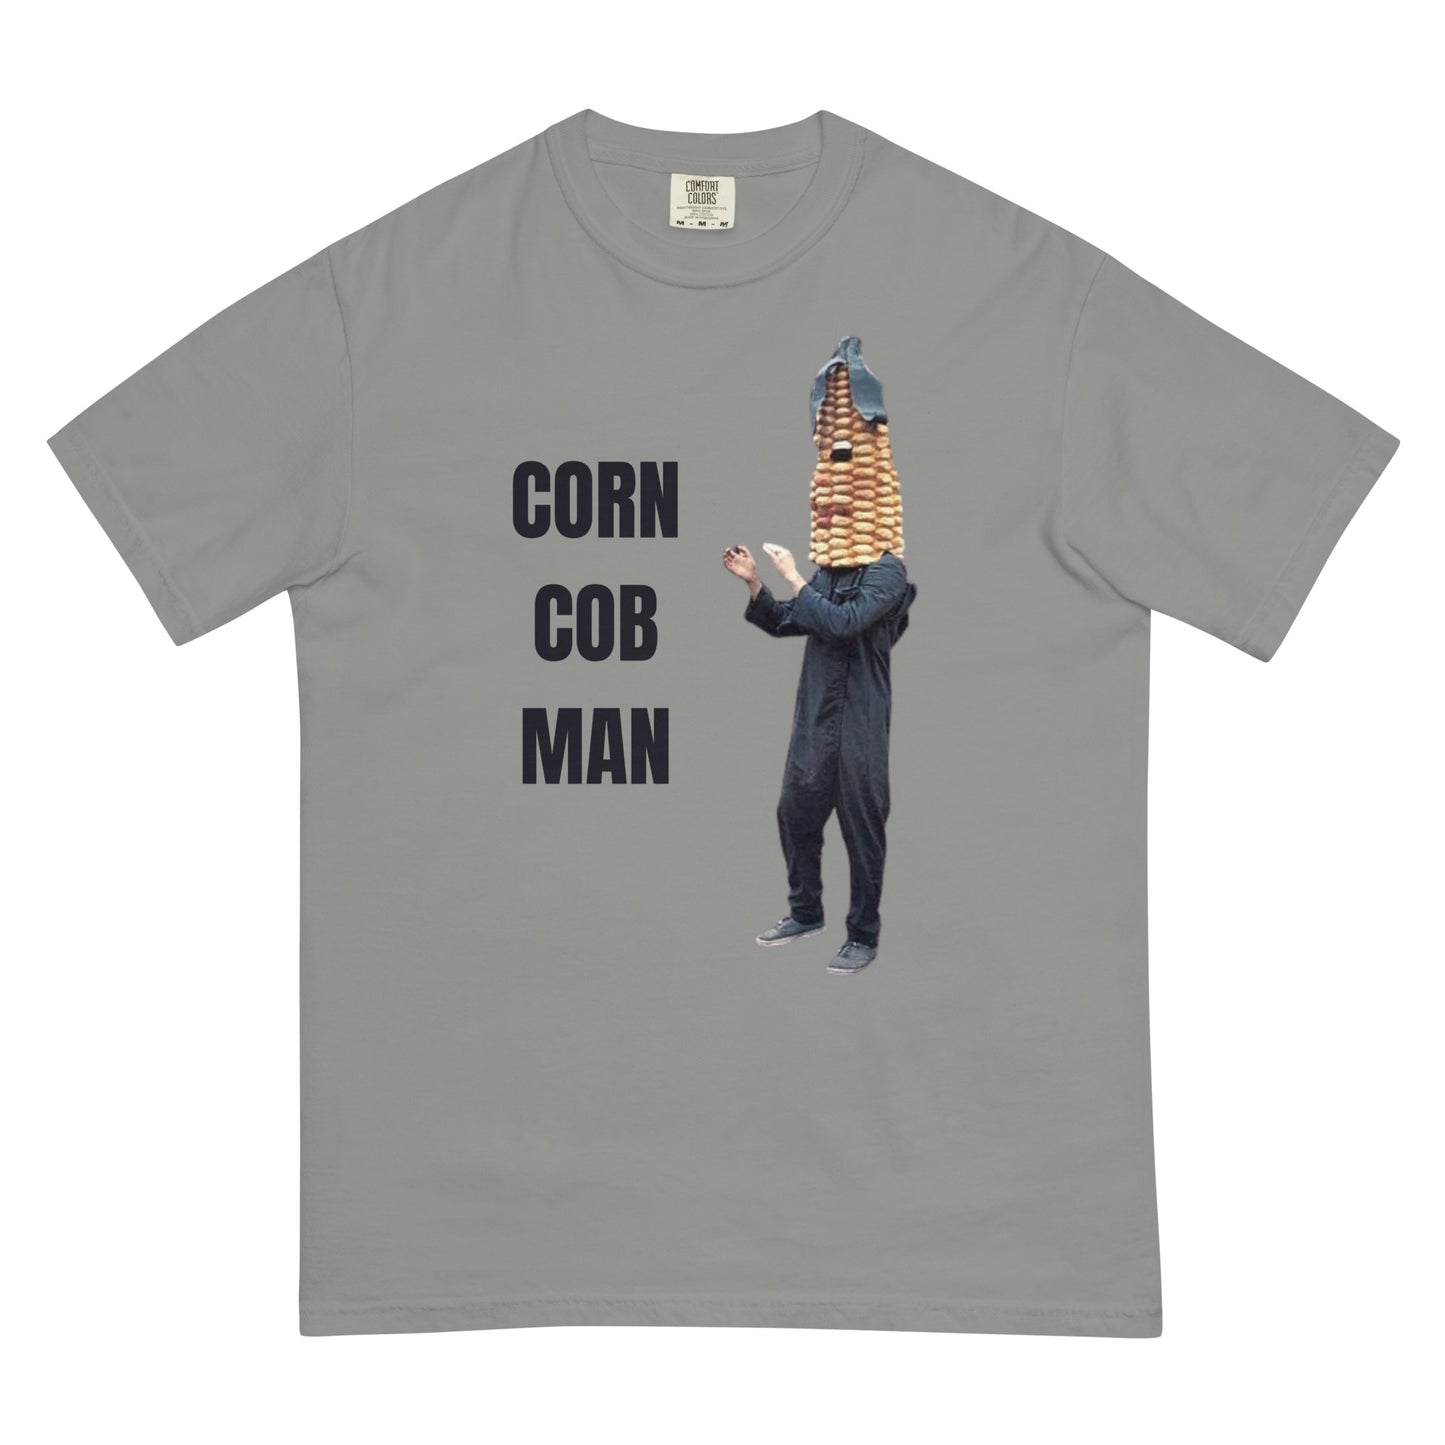 Corn Cob Man T-shirt